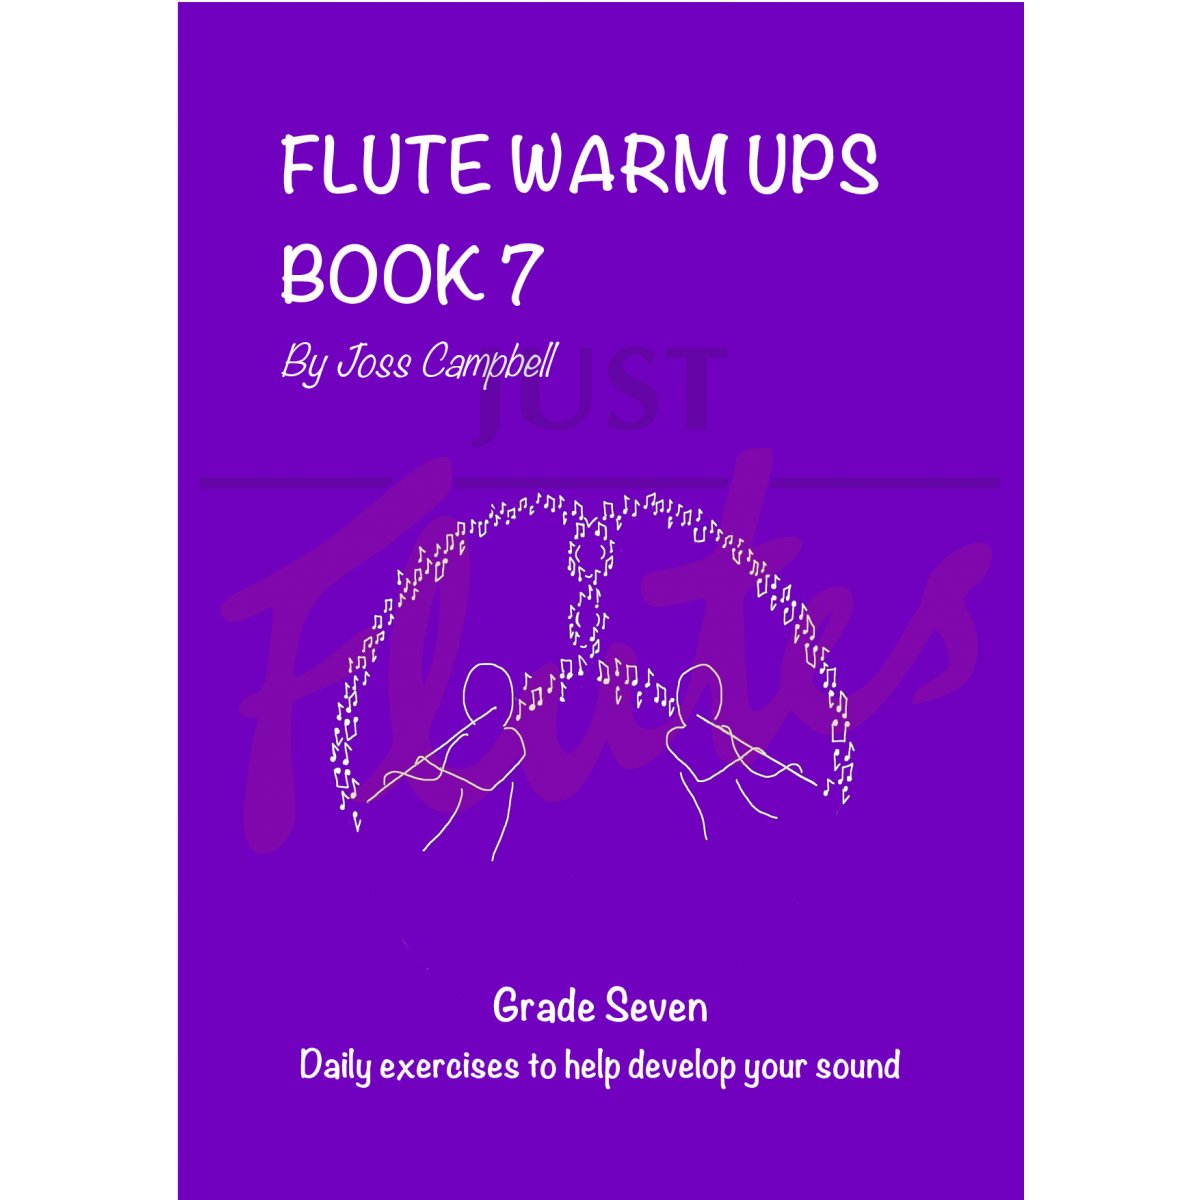 Flute Warm Ups Book 7